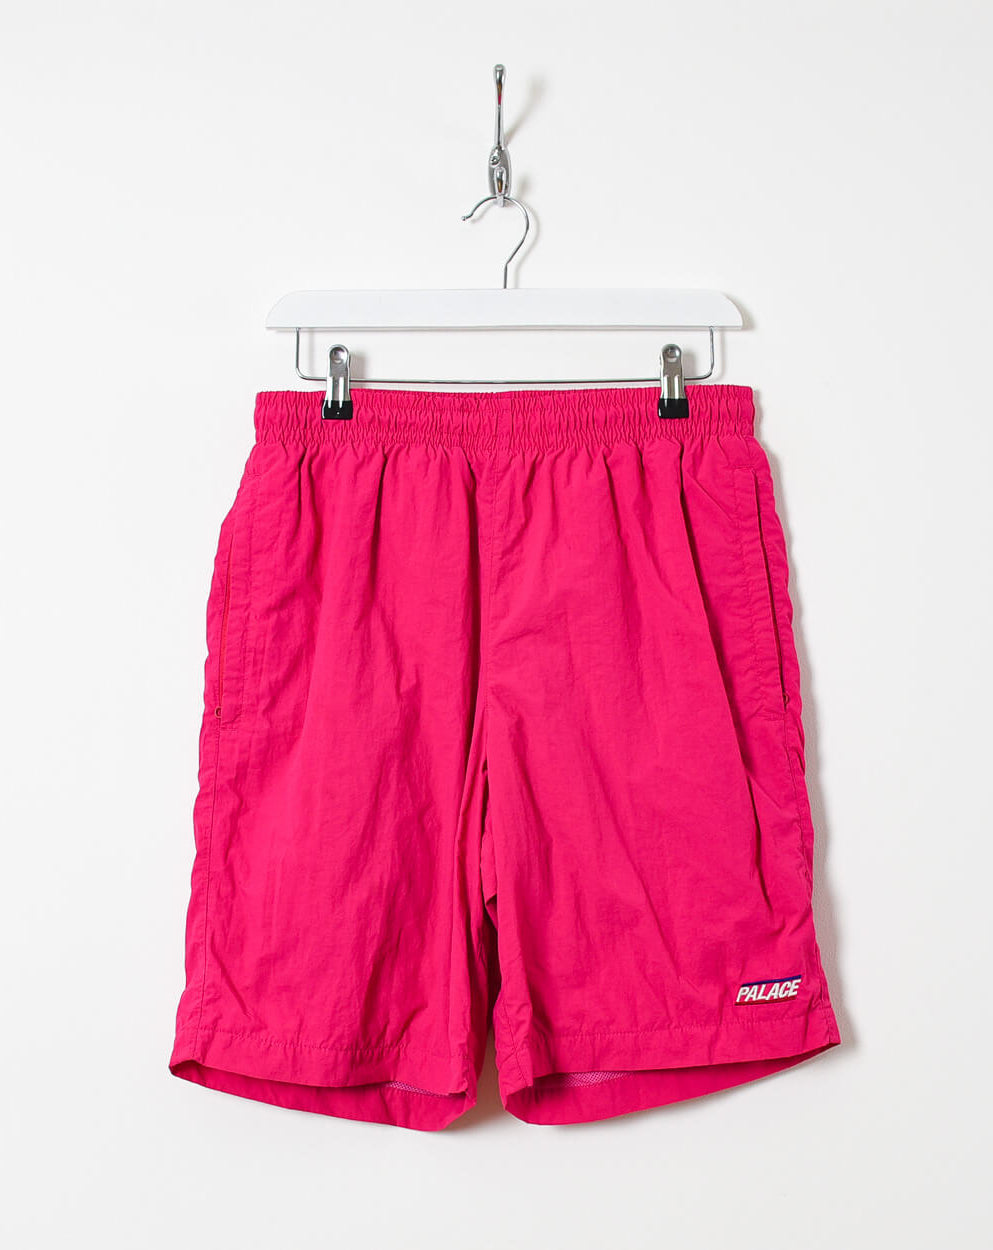 Palace Swimwear Shorts - W30 - Domno Vintage 90s, 80s, 00s Retro and Vintage Clothing 